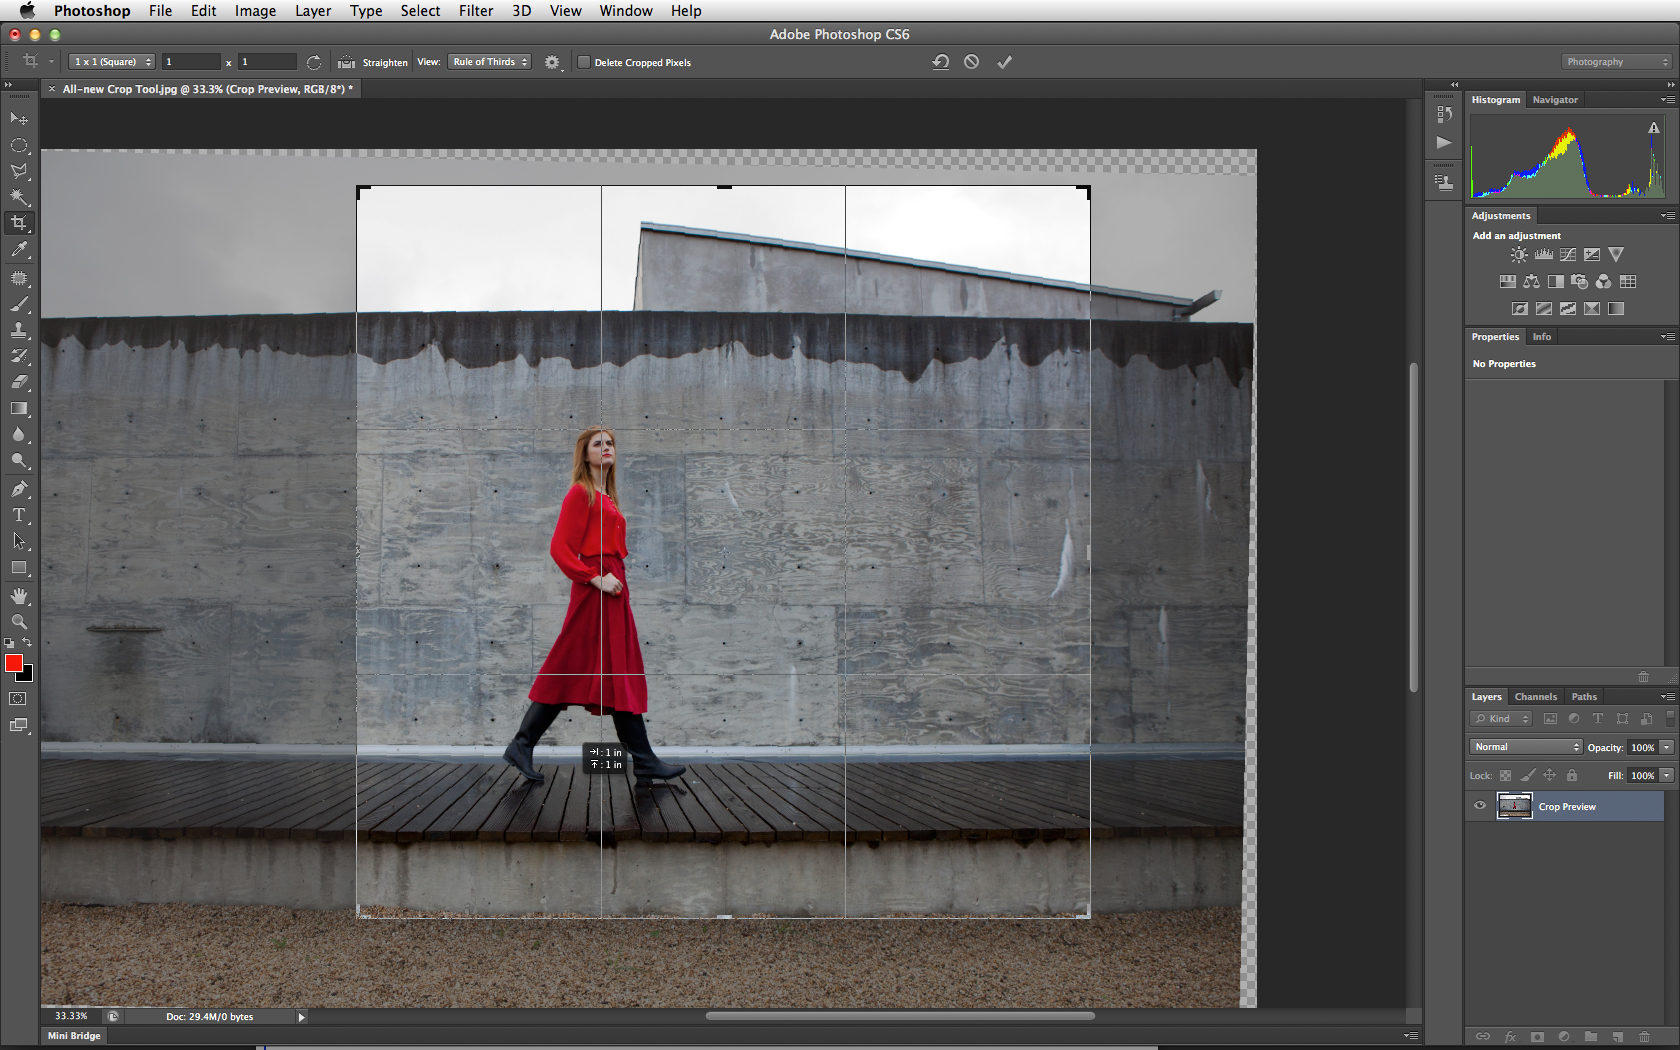 (Adobe Photoshop CS6 screenshot courtesy of Adobe Systems.)